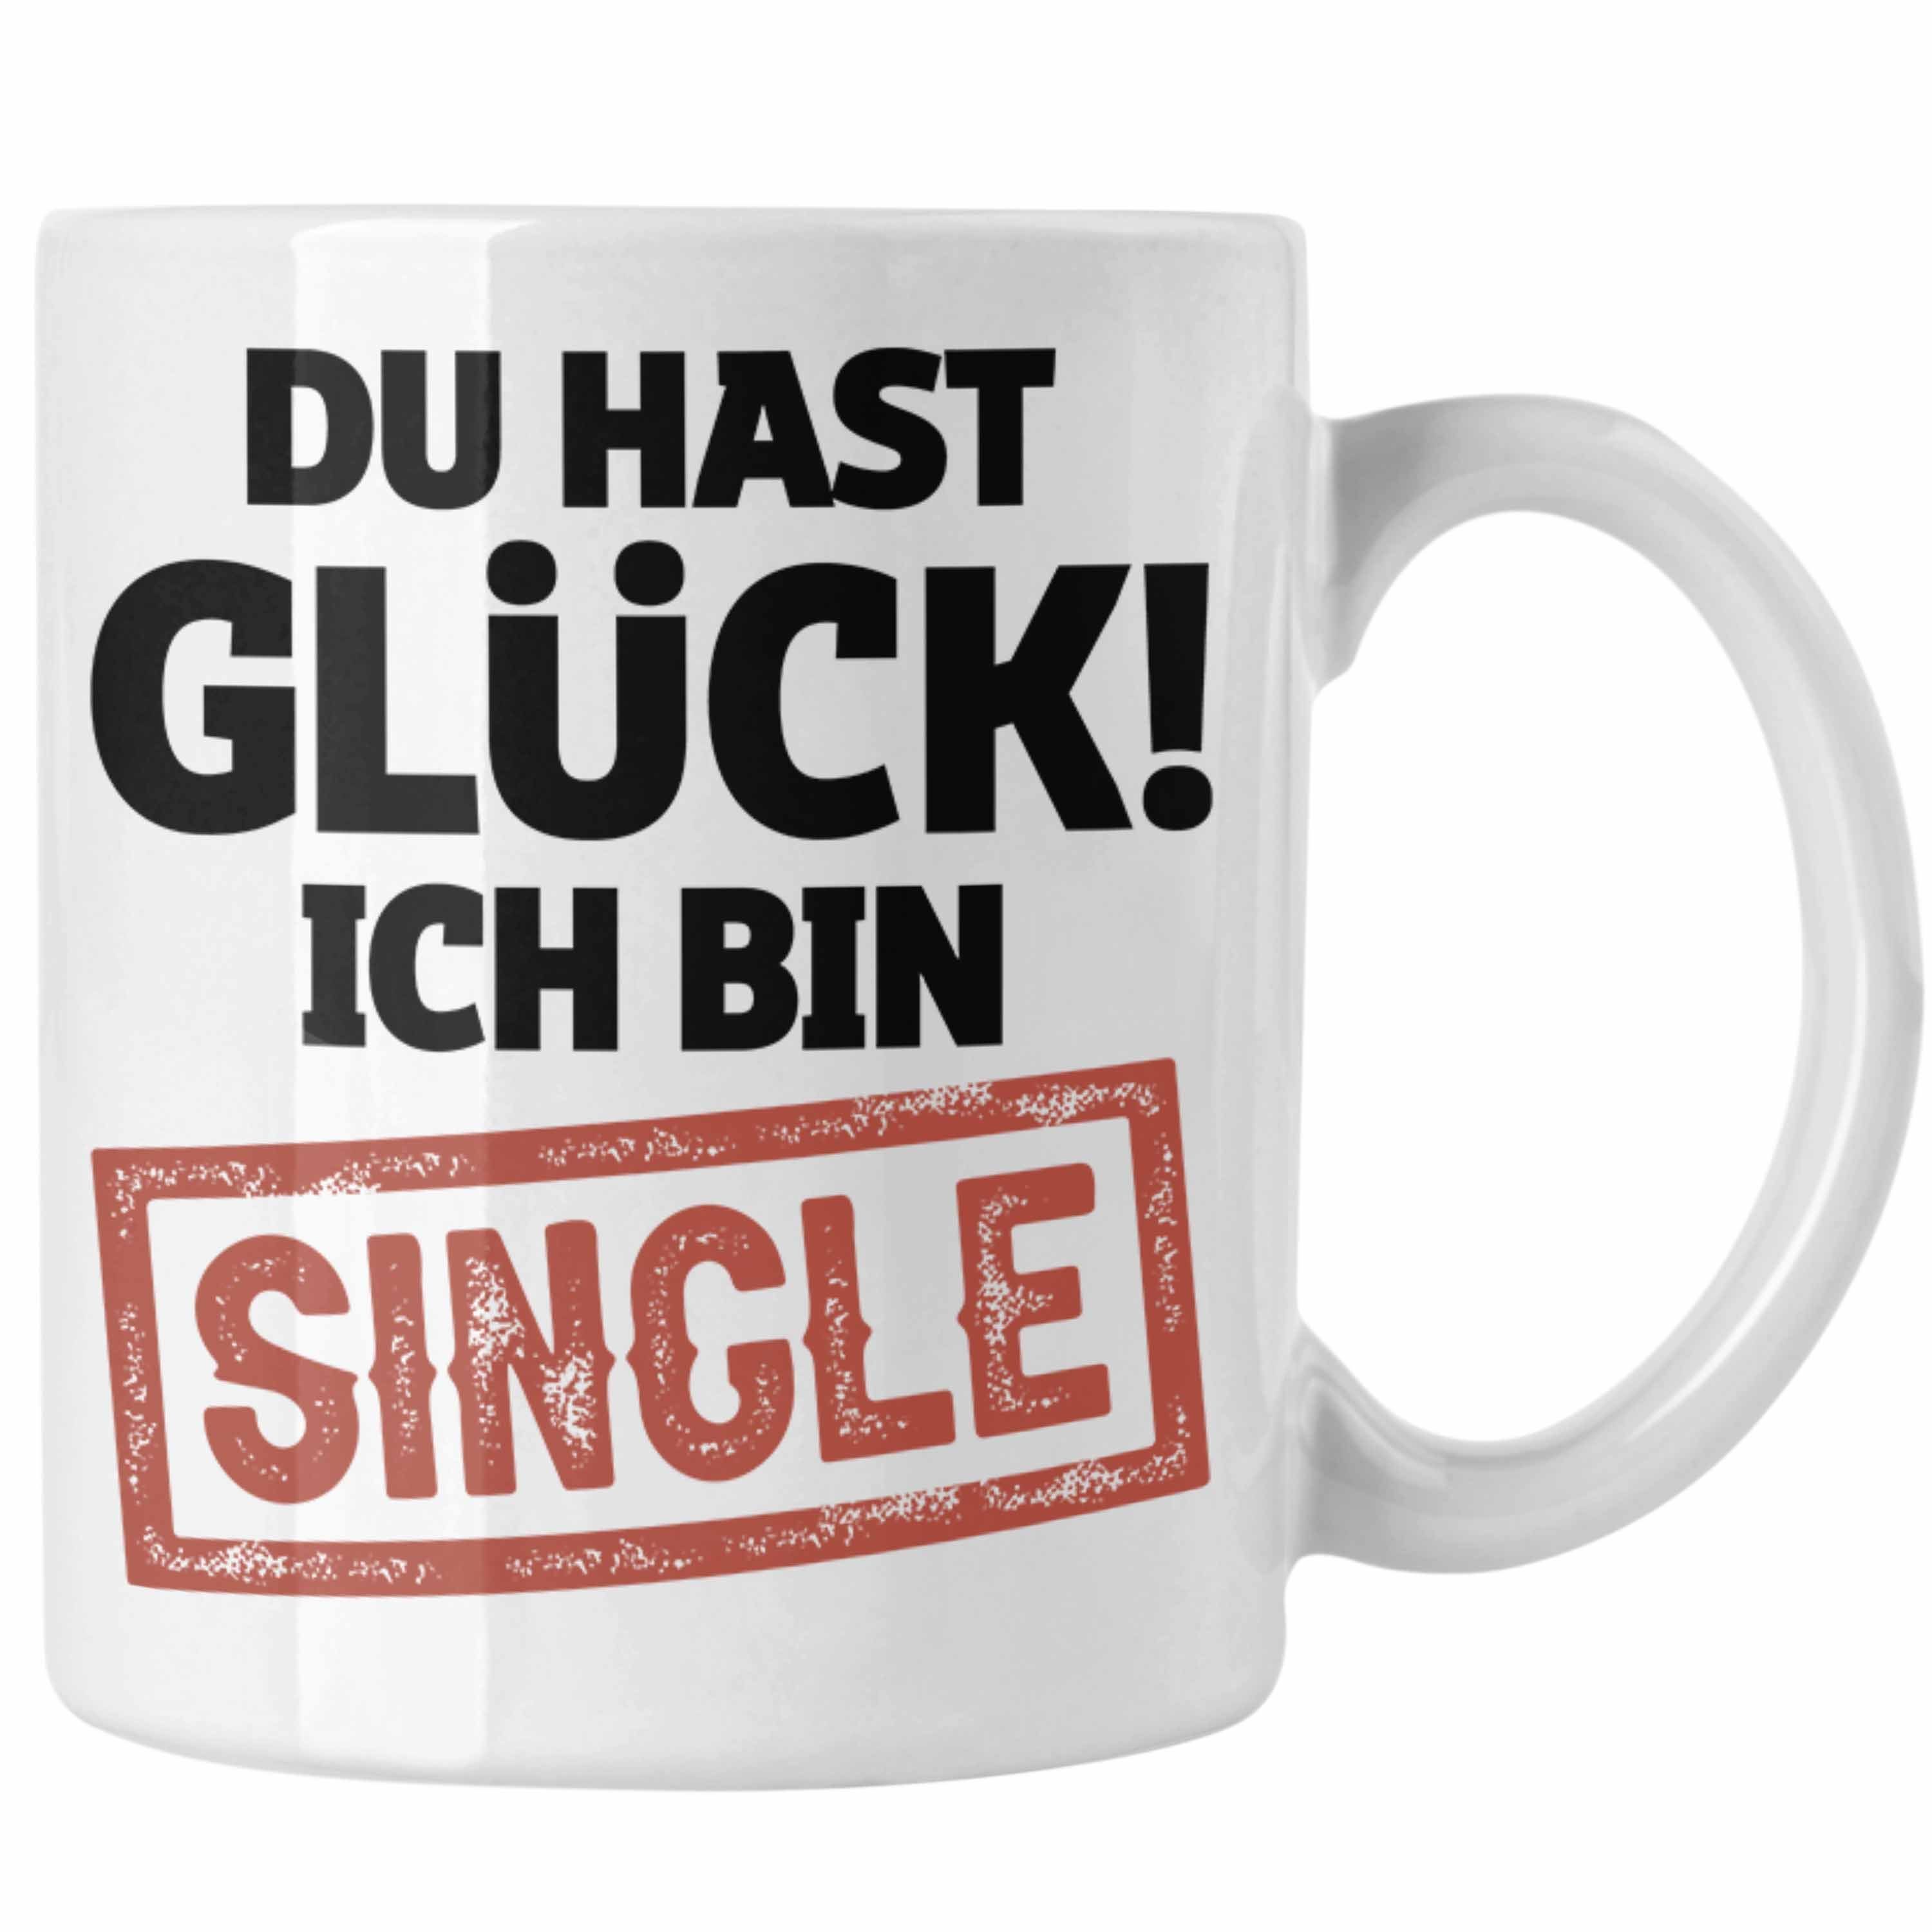 Trendation Tasse Single Solo Tasse Geschenk Kollege Geschenkidee Kaffee-Becher Weiss